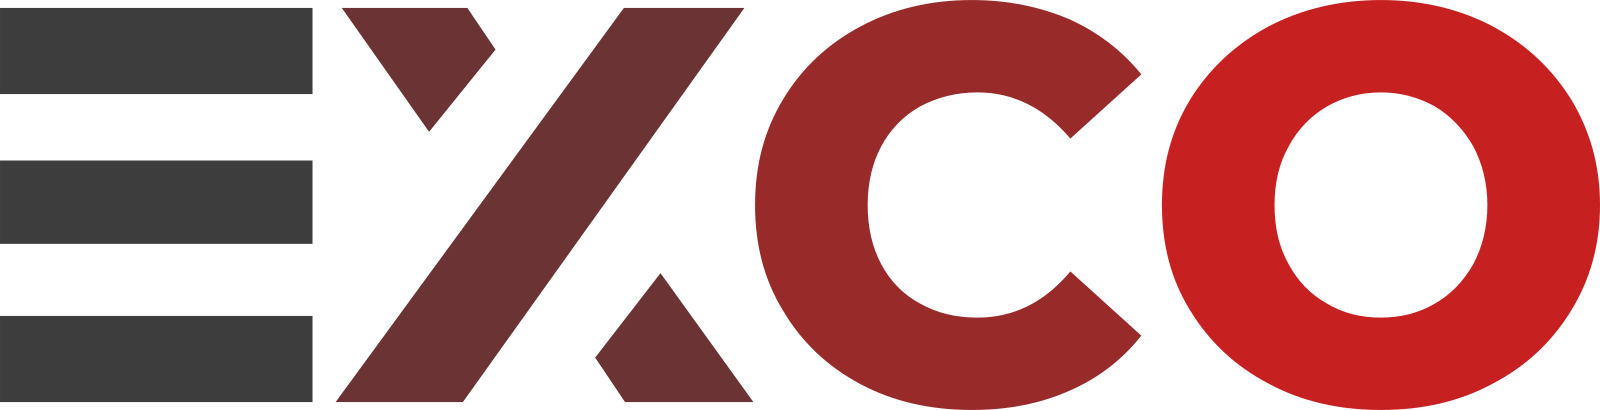 EXCO LLC Logo